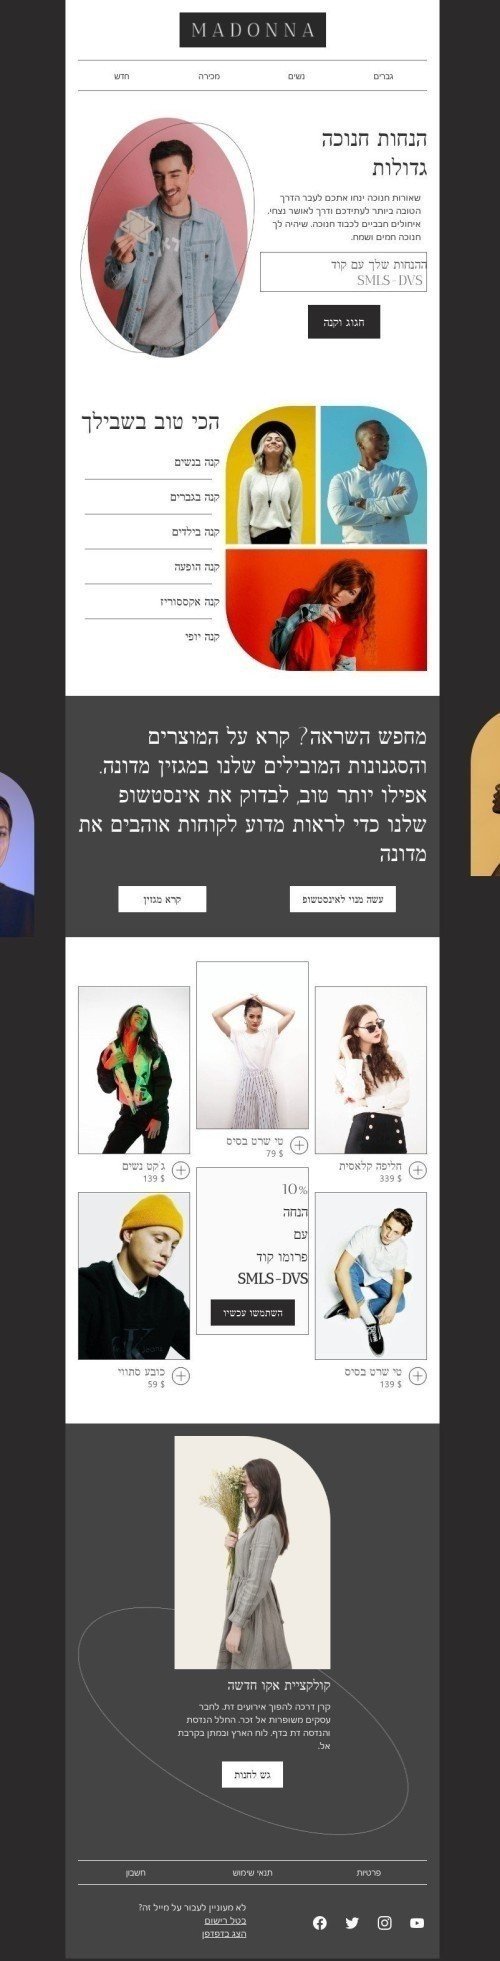 Hanukkah Email Template «Big Hanukkah Discounts» for Fashion industry desktop view